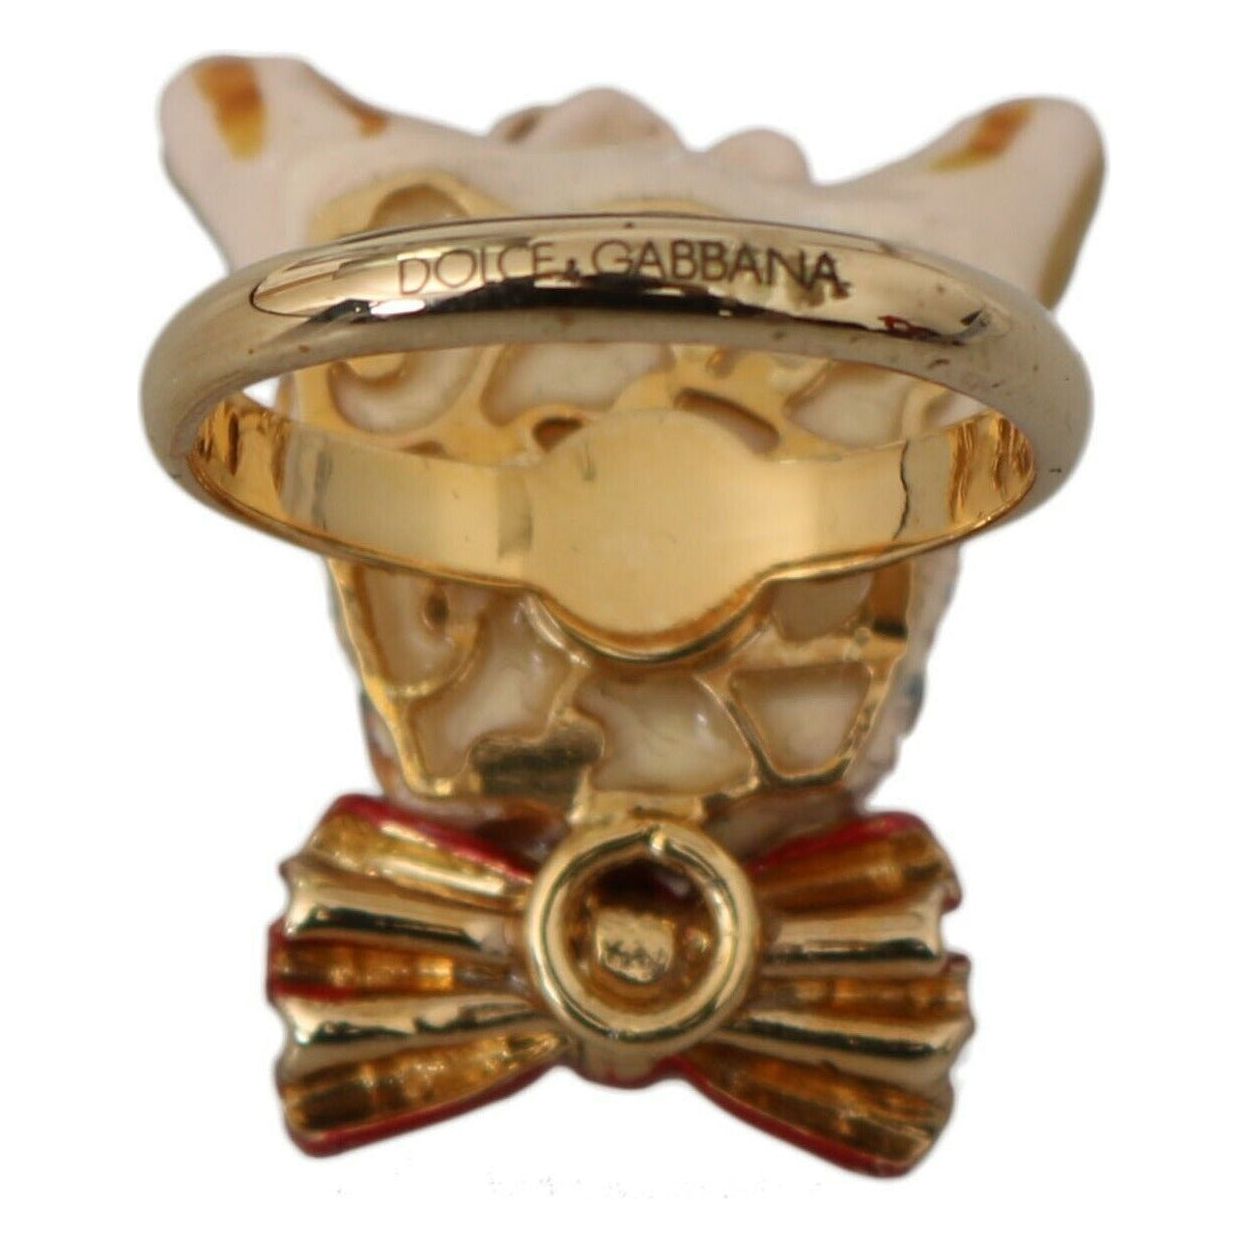 Dolce & Gabbana Elegant Canine Charm Women's Ring gold-brass-resin-beige-dog-pet-branded-accessory-ring-1 s-l1600-92-a3ce5f42-278.jpg